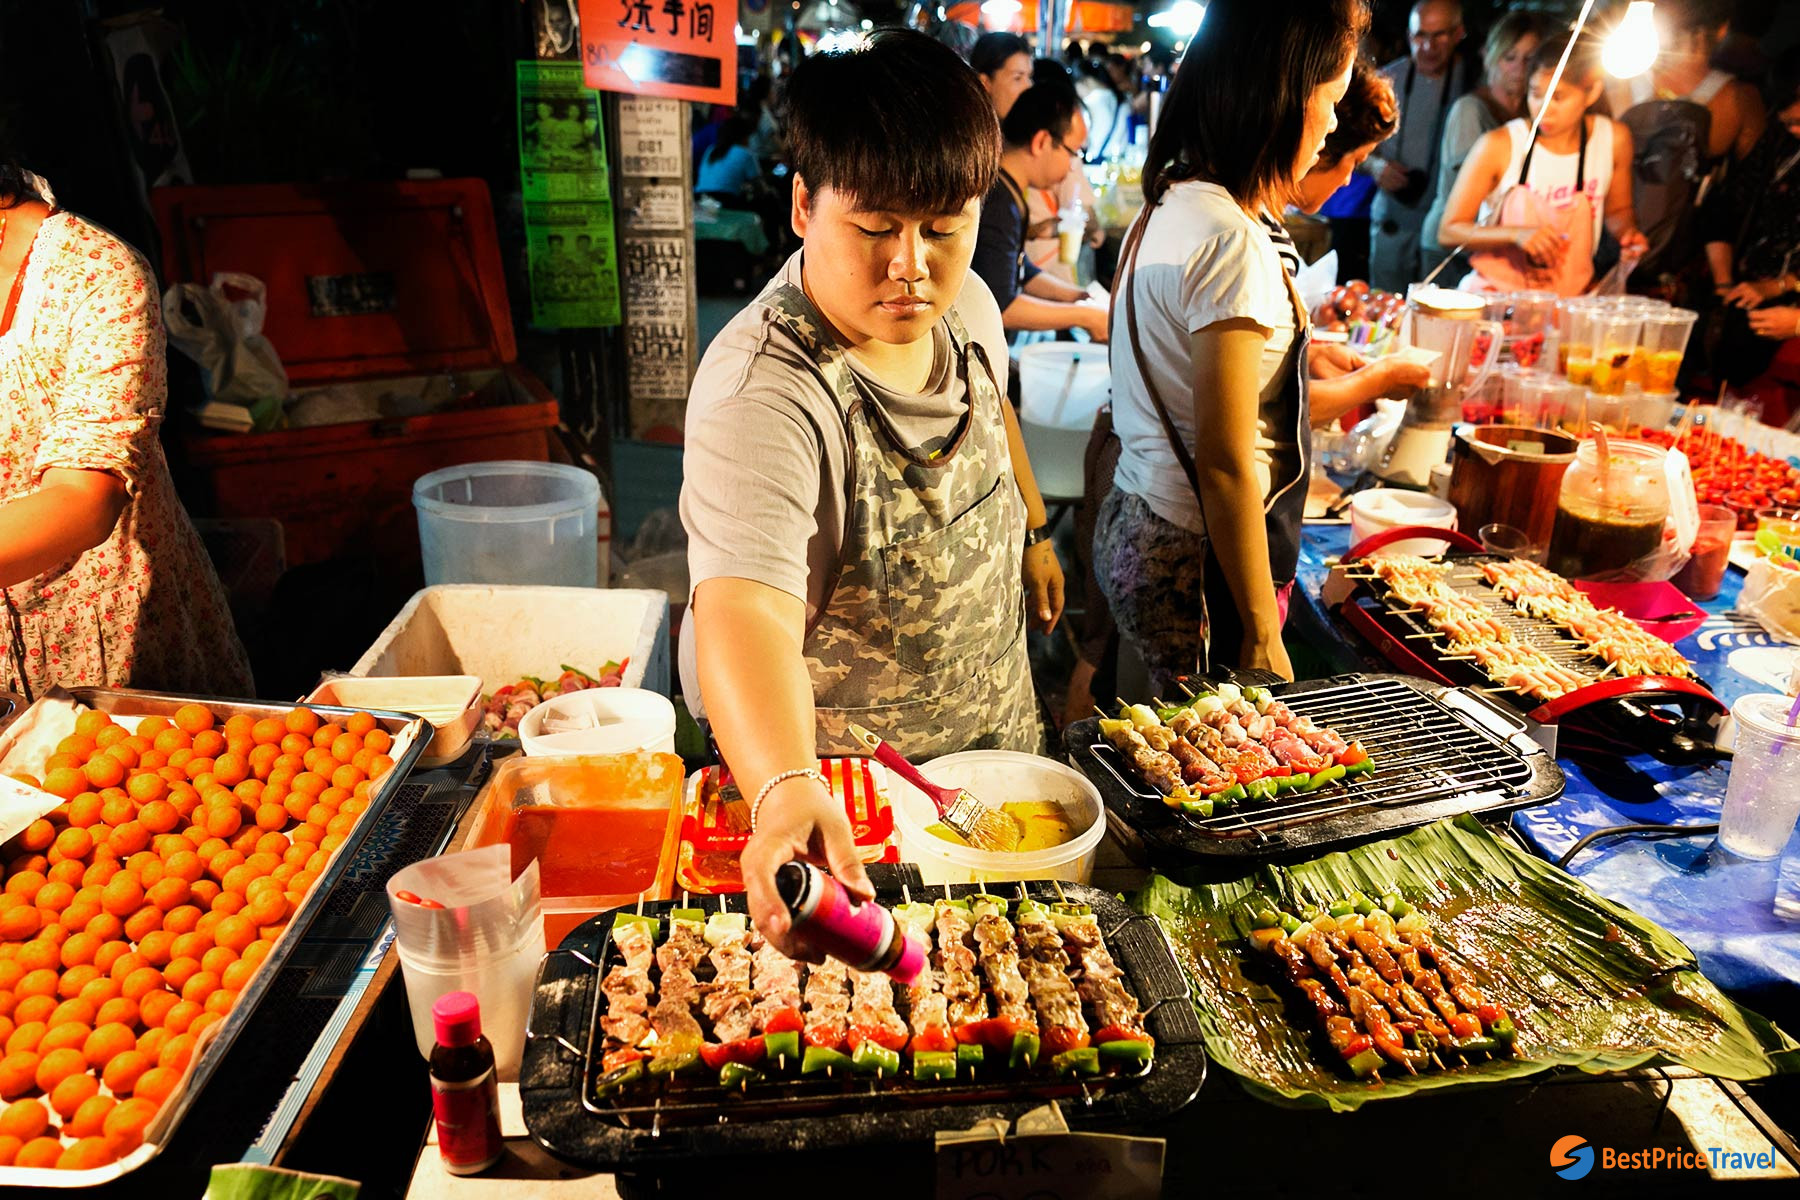 Saturday Night Market at Wua Lai Road